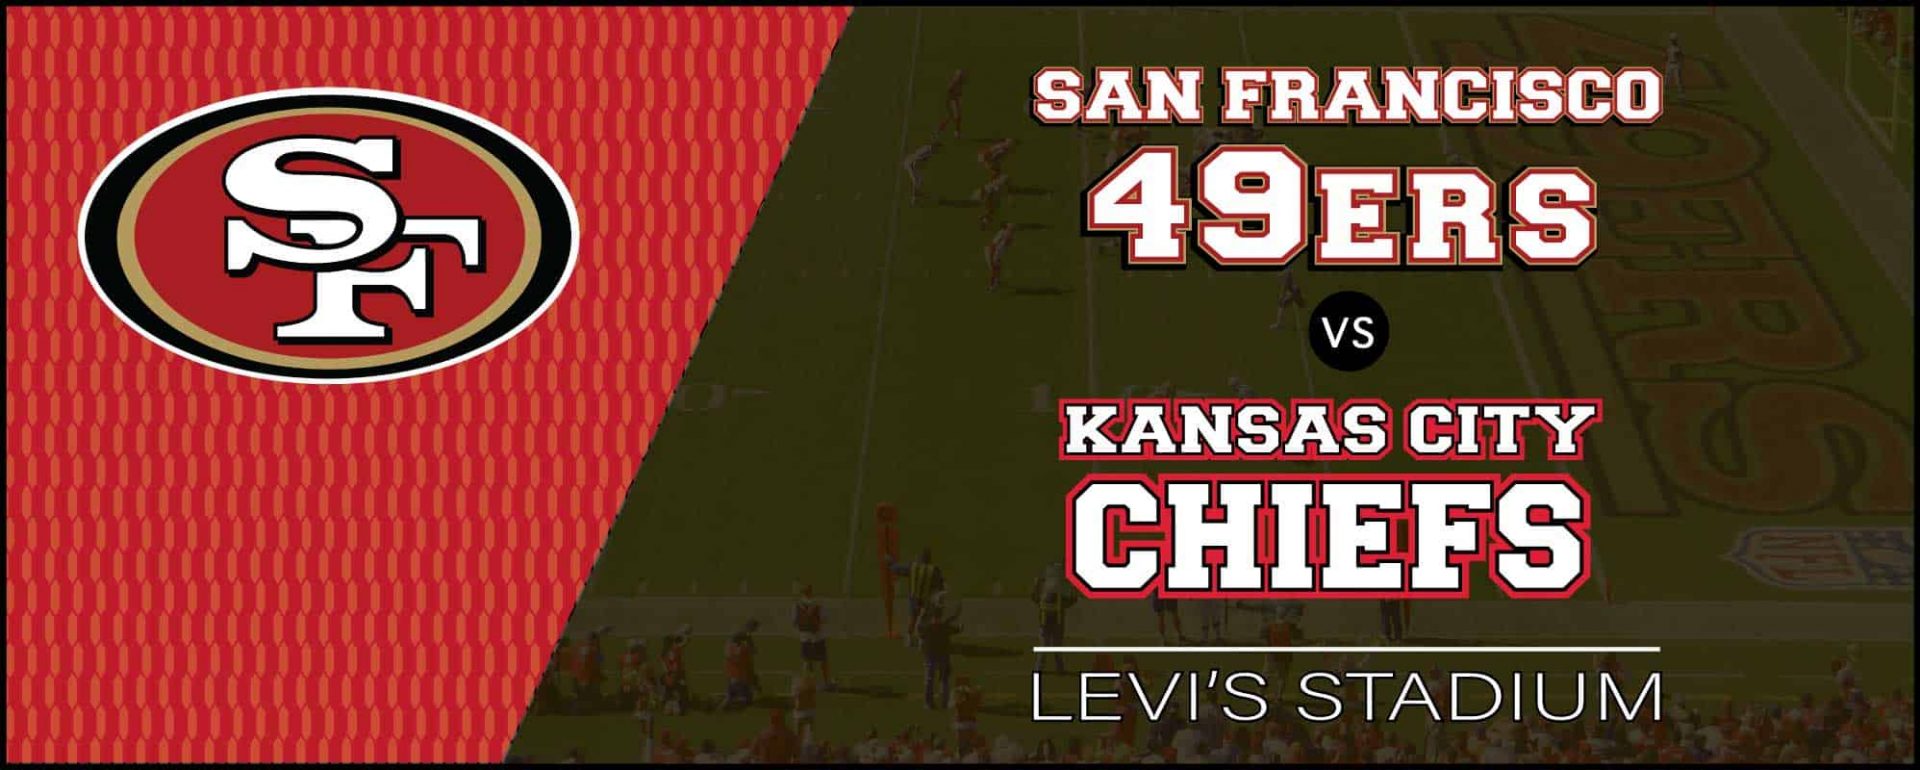 kc chiefs vs san francisco 49ers